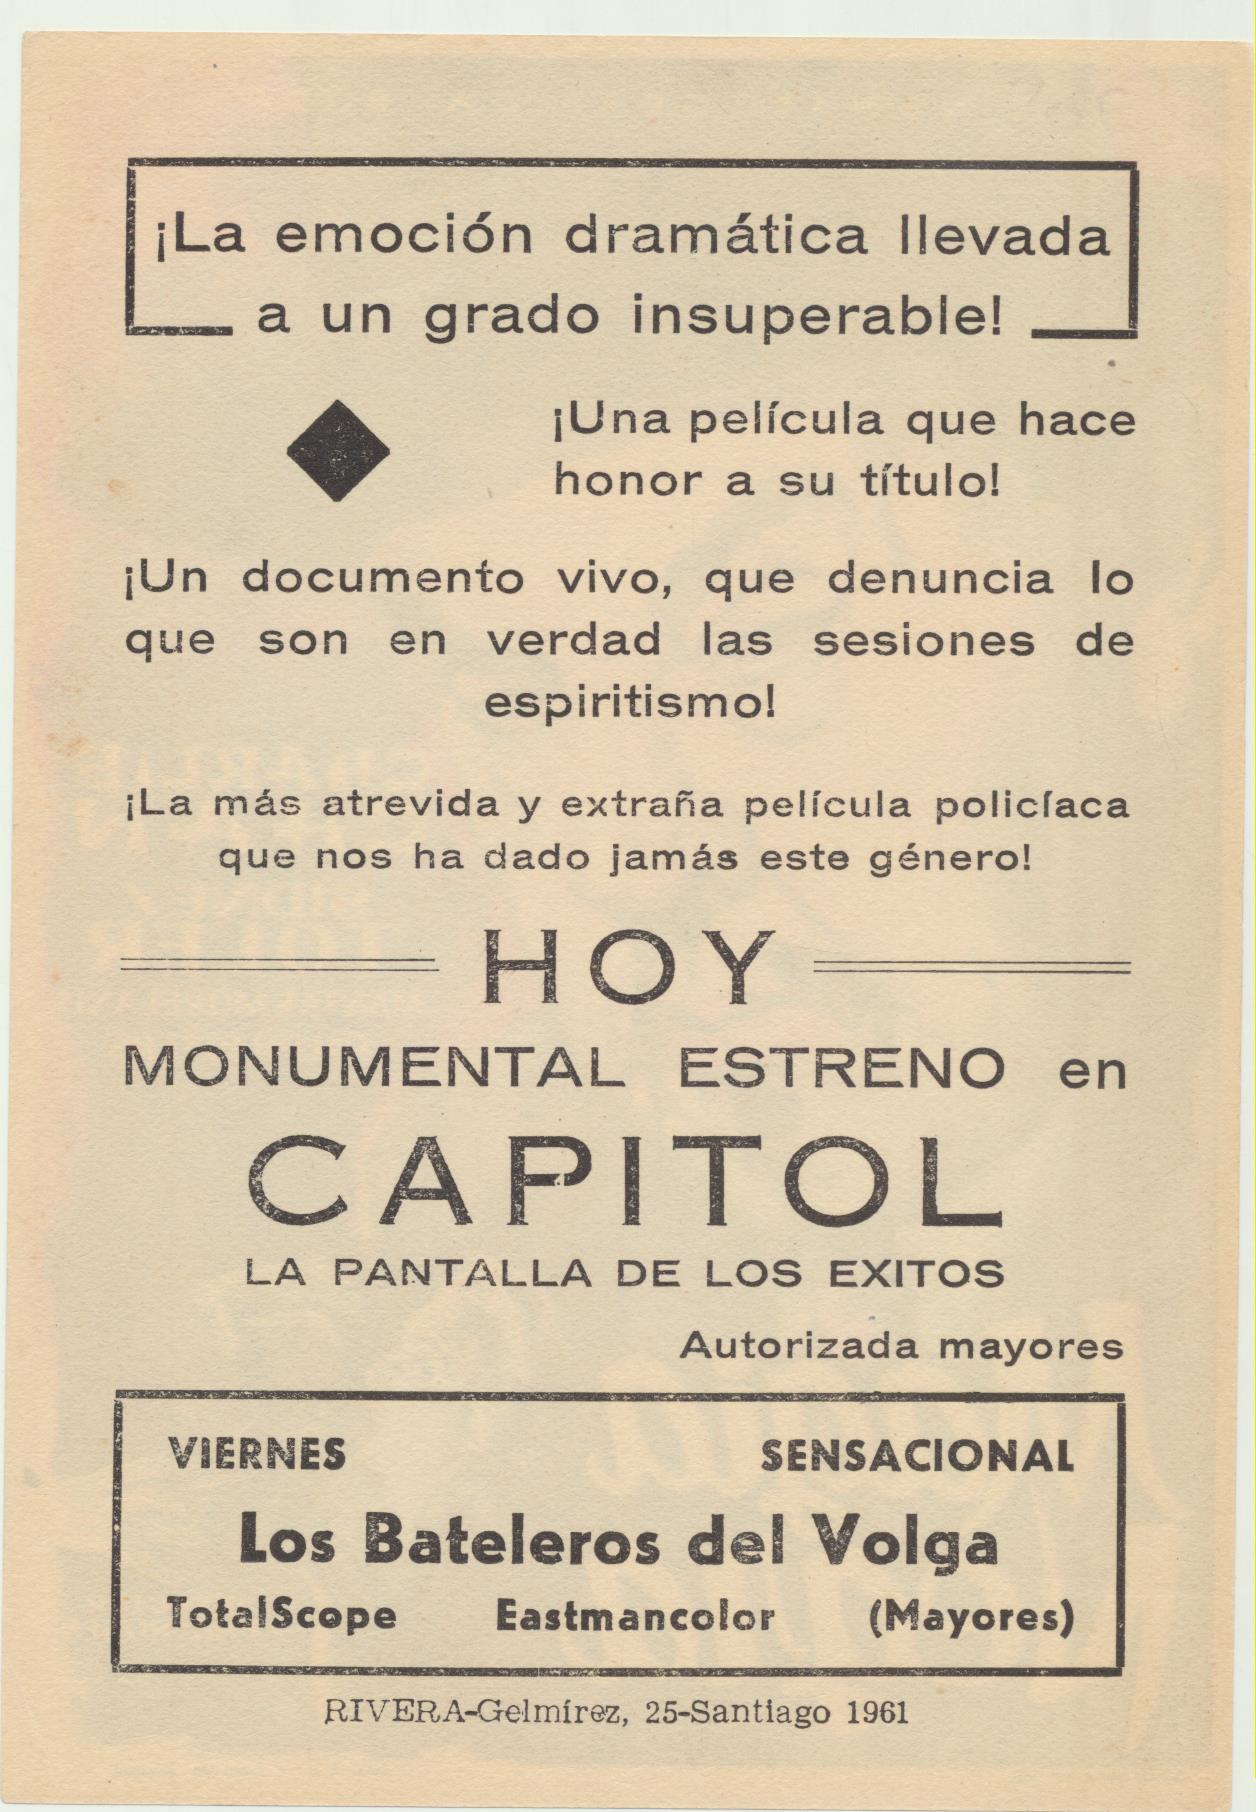 Magia Negra. Sencillo de Cinematográfica Roda. Cine Capitol. Santiago 1961. ¡IMPECABLE!